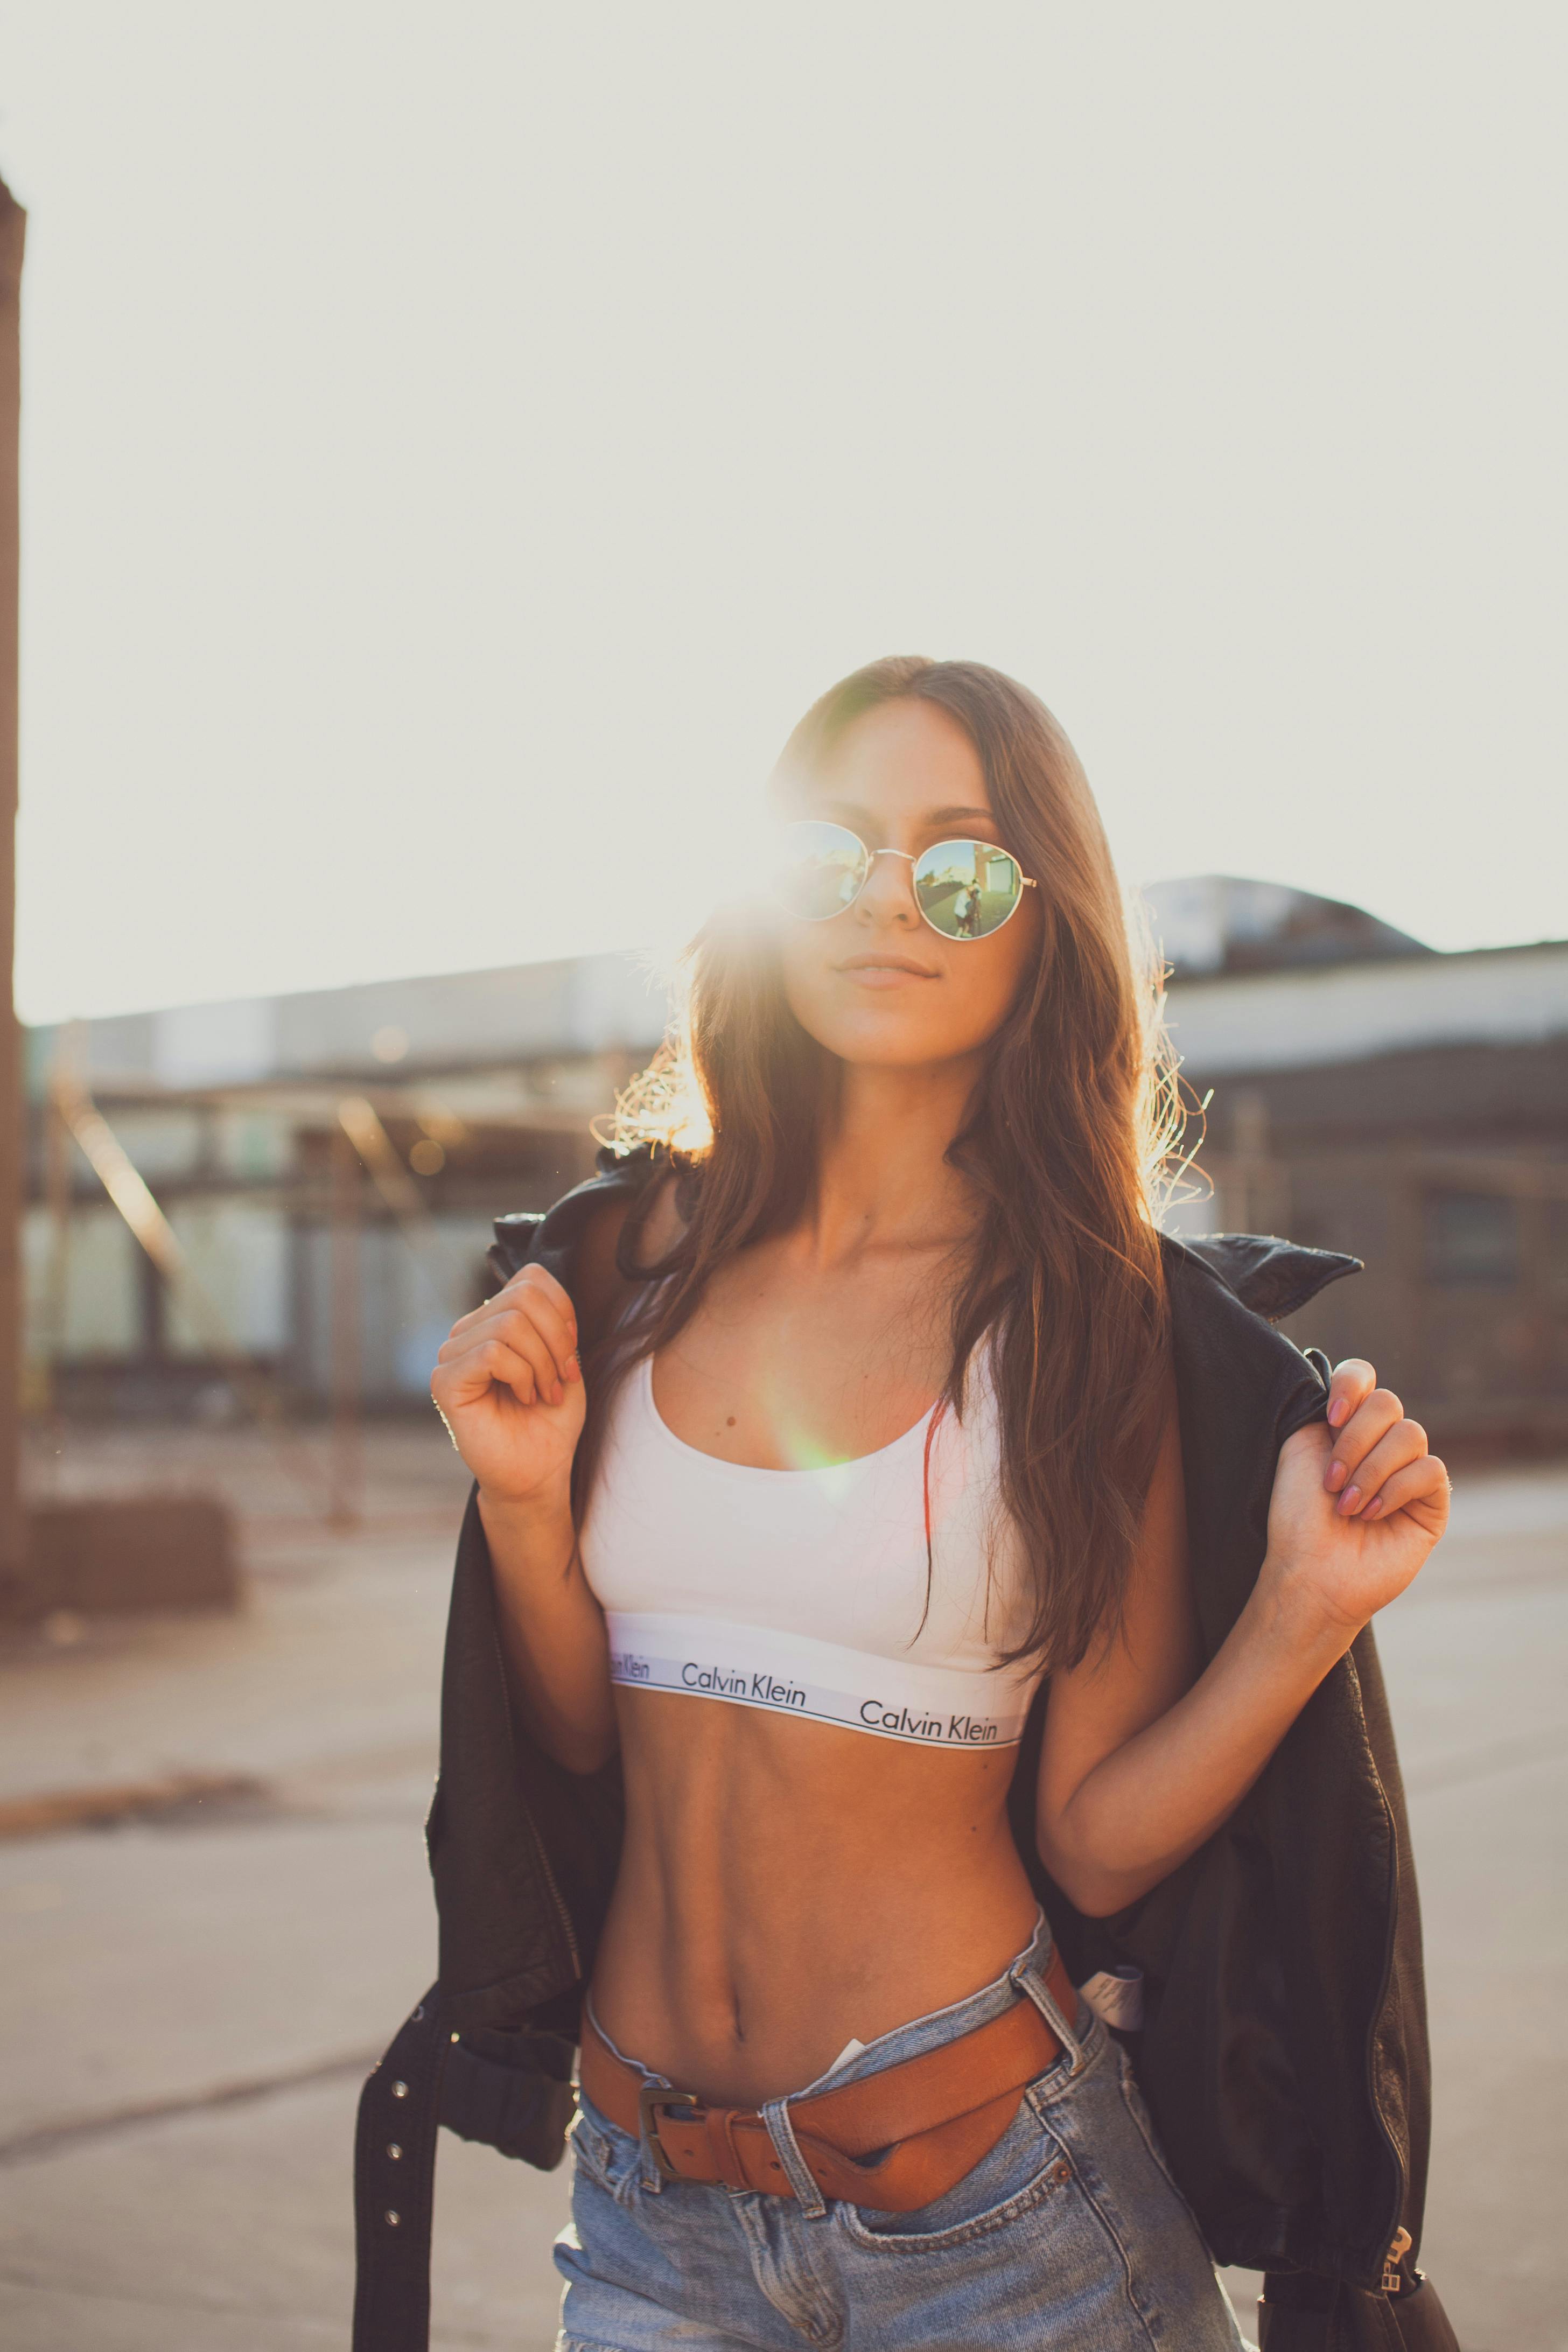 Woman wearing white Nike sports bra and brown and black plaid jacket photo  – Free Style Image on Unsplash